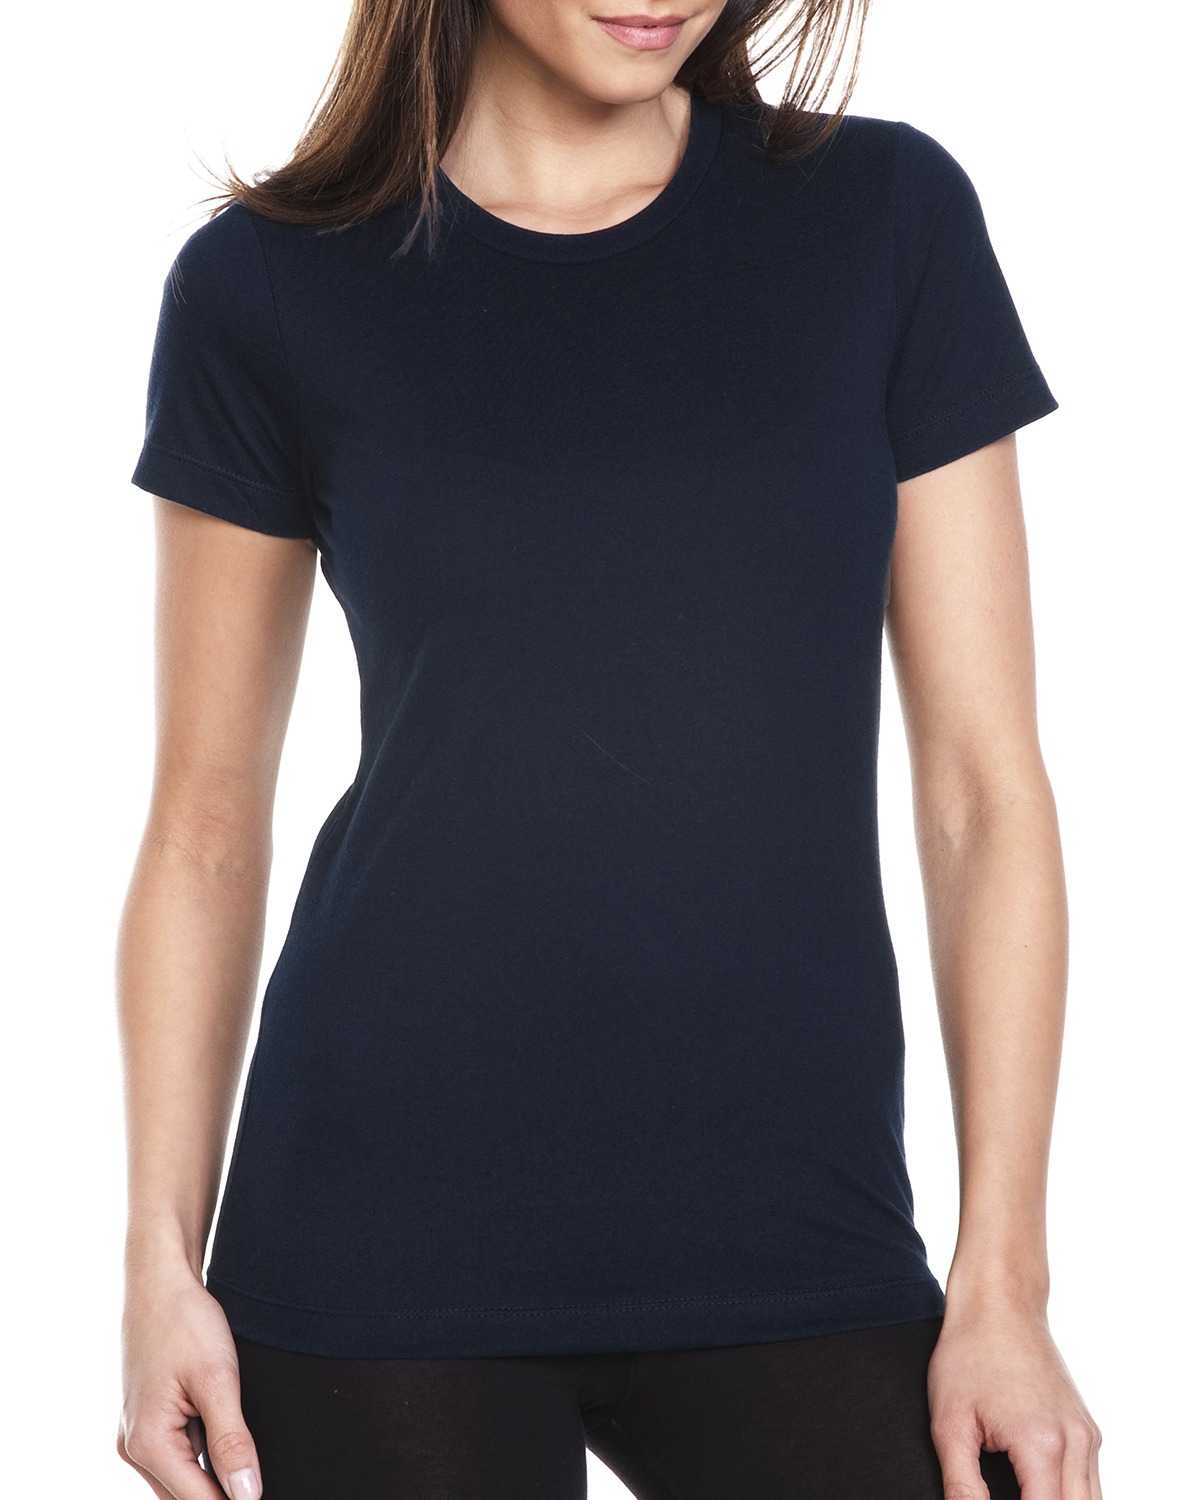 Next Level N3900 Ladies' Boyfriend T-Shirt | ApparelChoice.com